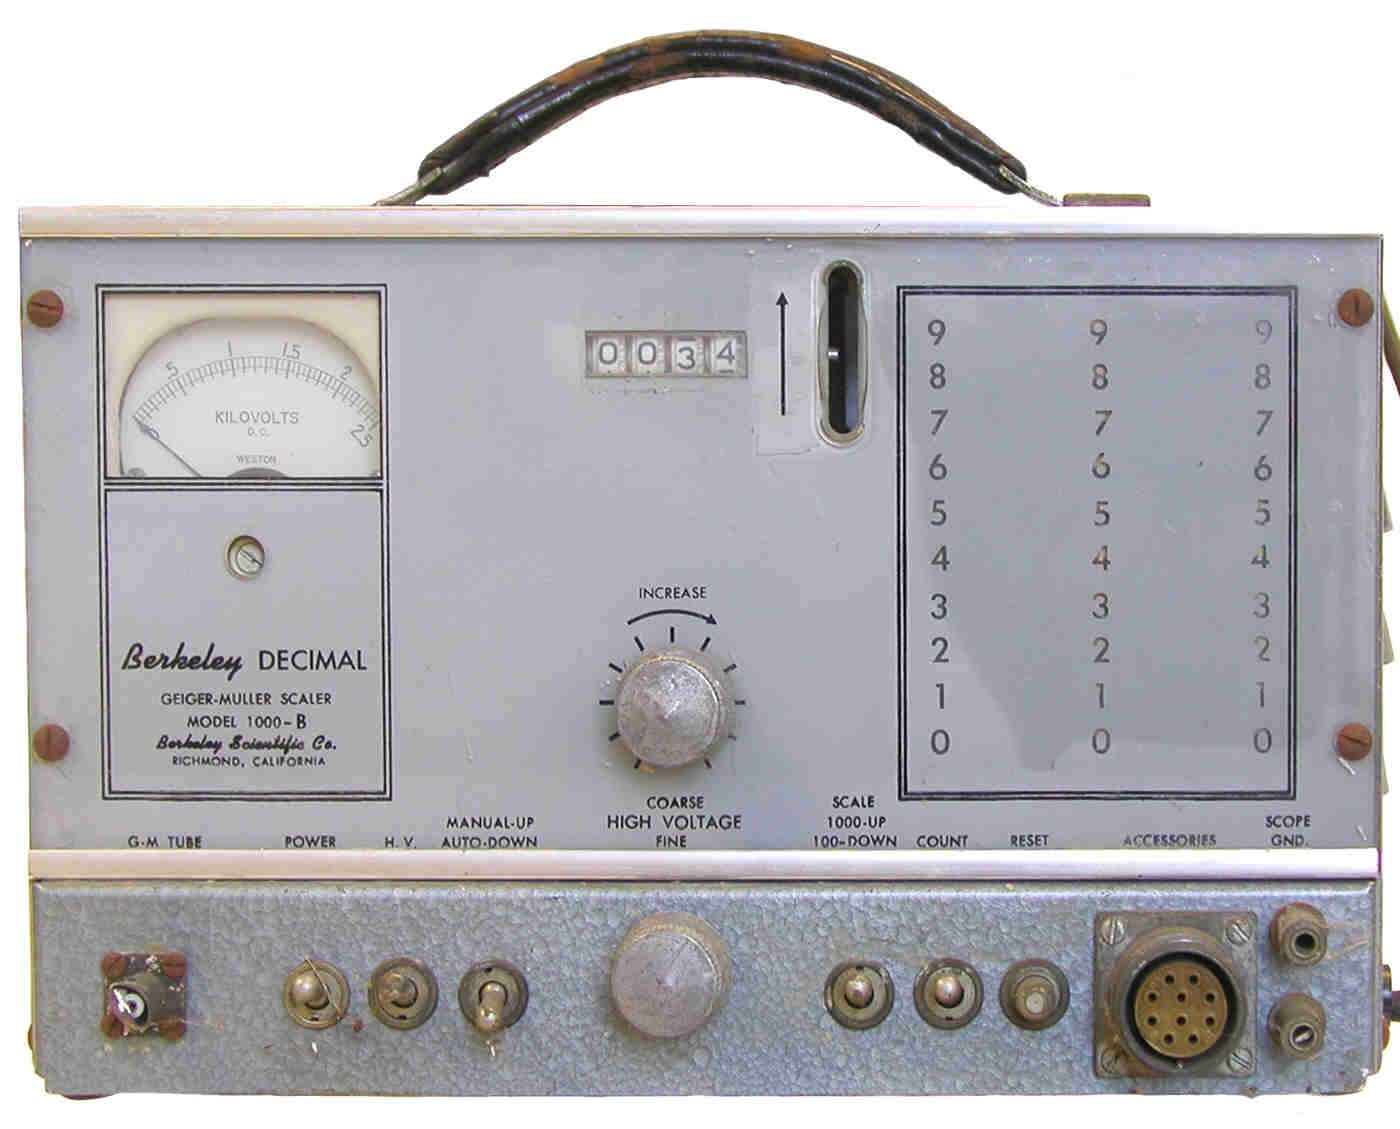 Berkeley Model 1000B Decimal Scaler